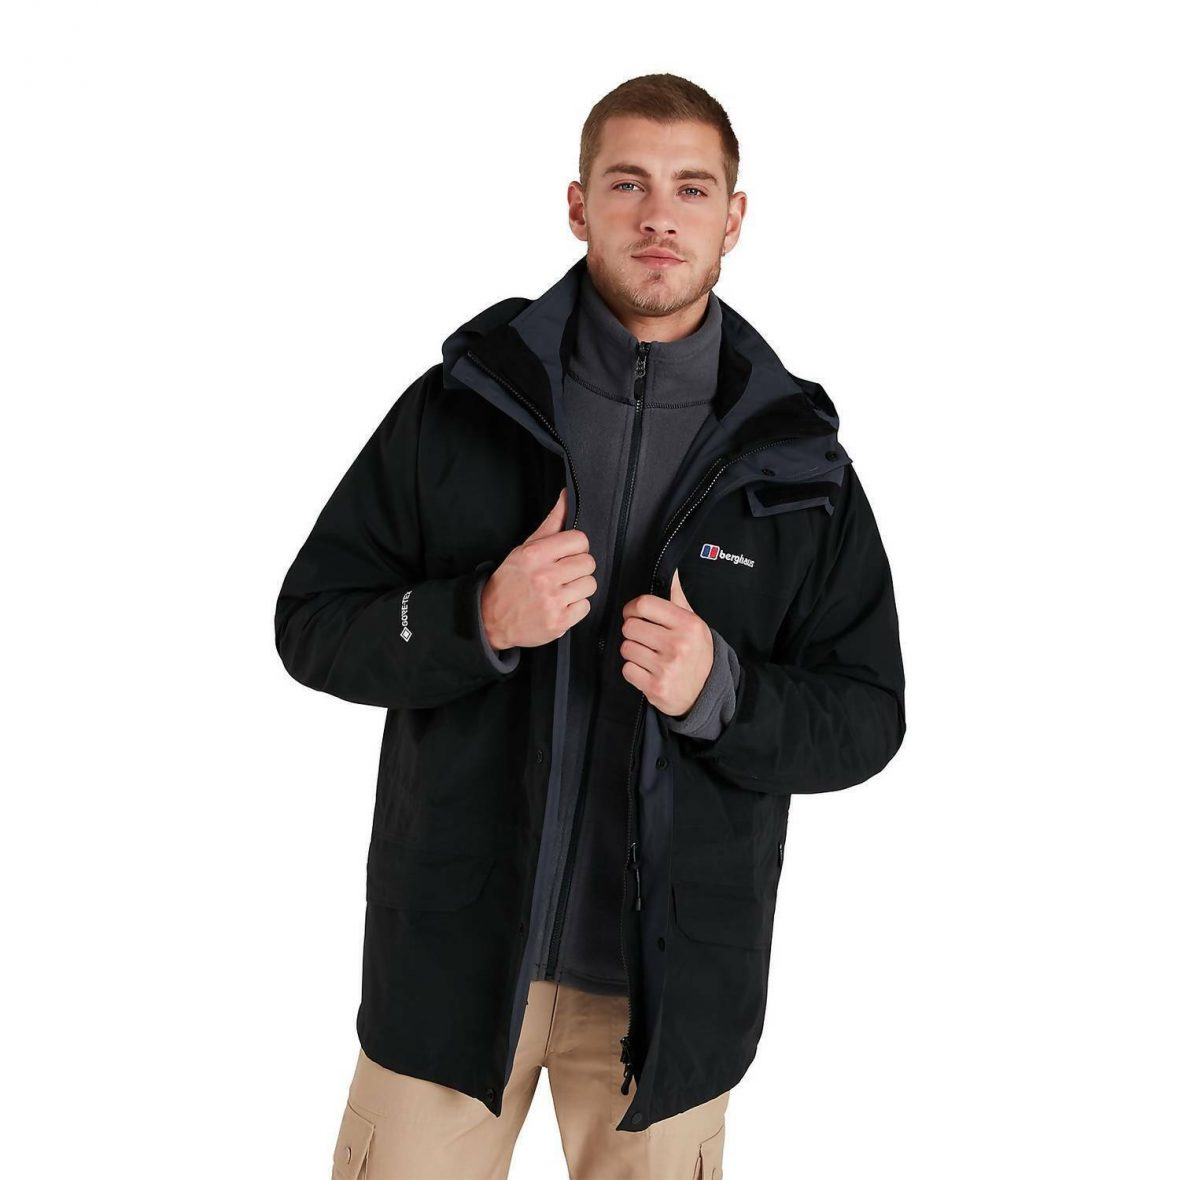 Berghaus 421016bp6 Men’s Cornice InterActive Jacket – Black i